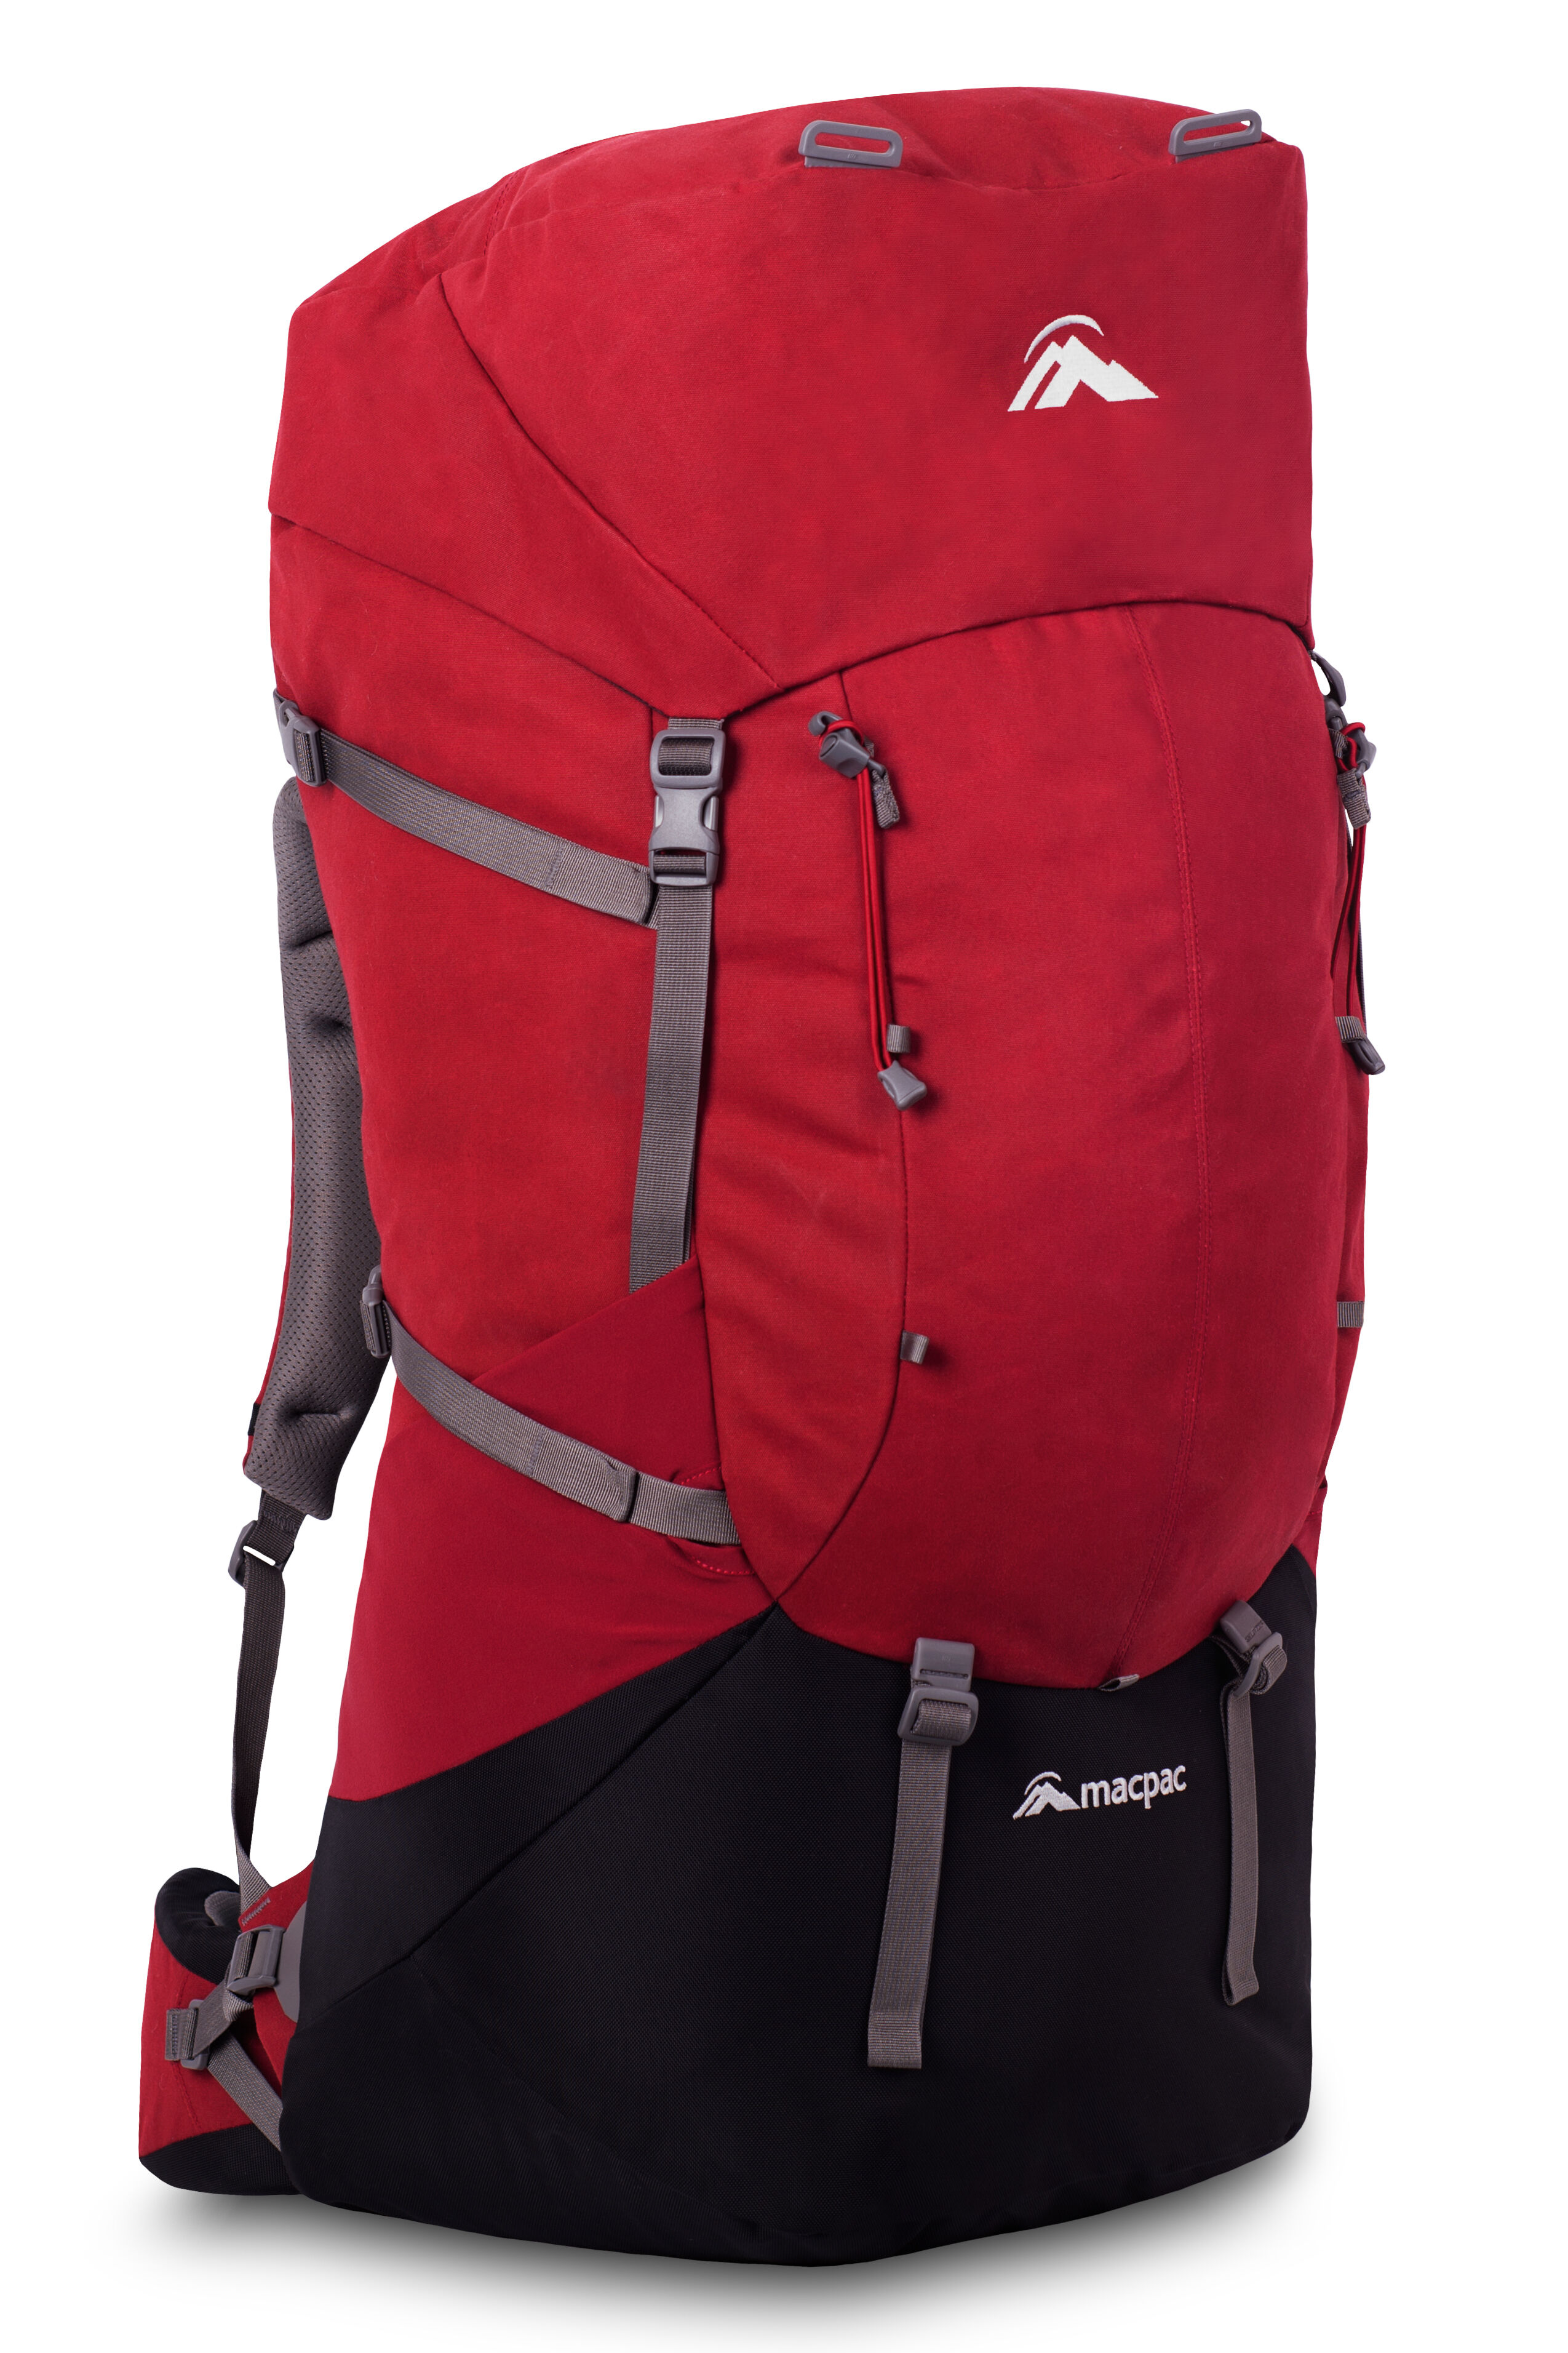 Macpac Torre 80L AzTec® Hiking Pack | Macpac